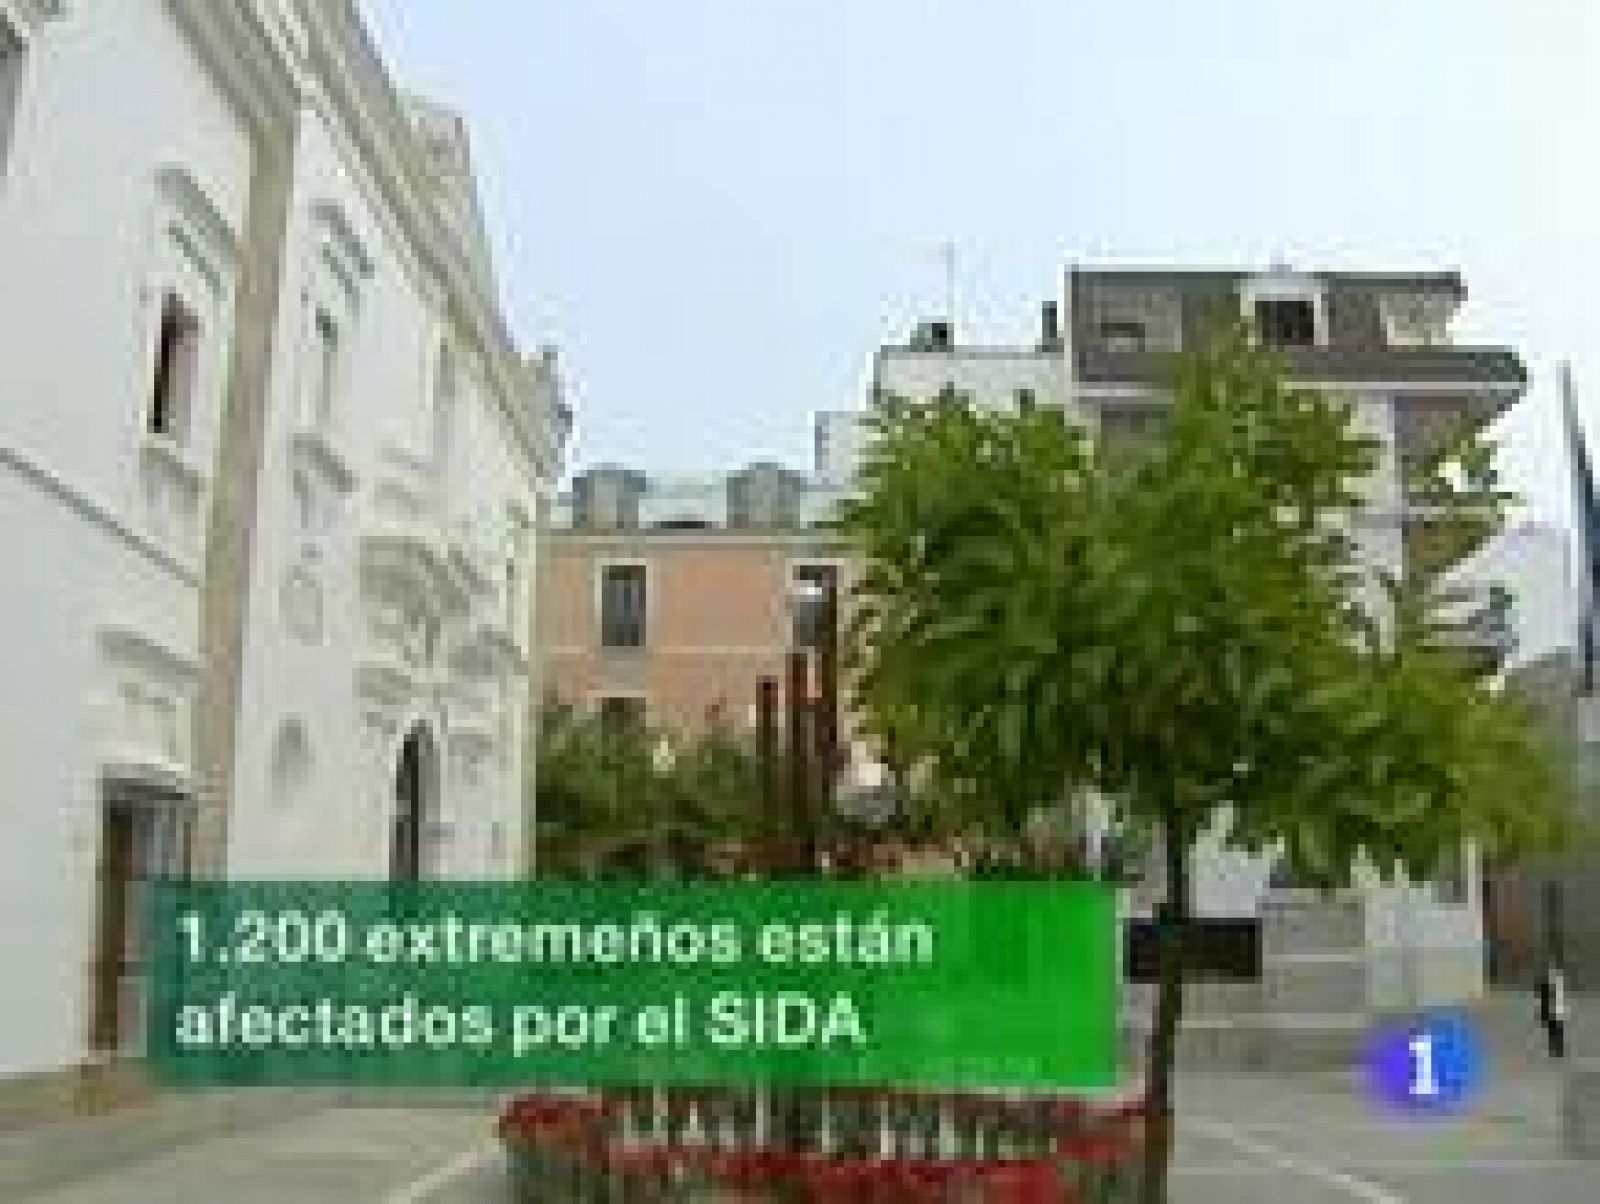 Noticias de Extremadura: Noticias de Extremadura - 01/12/09 | RTVE Play